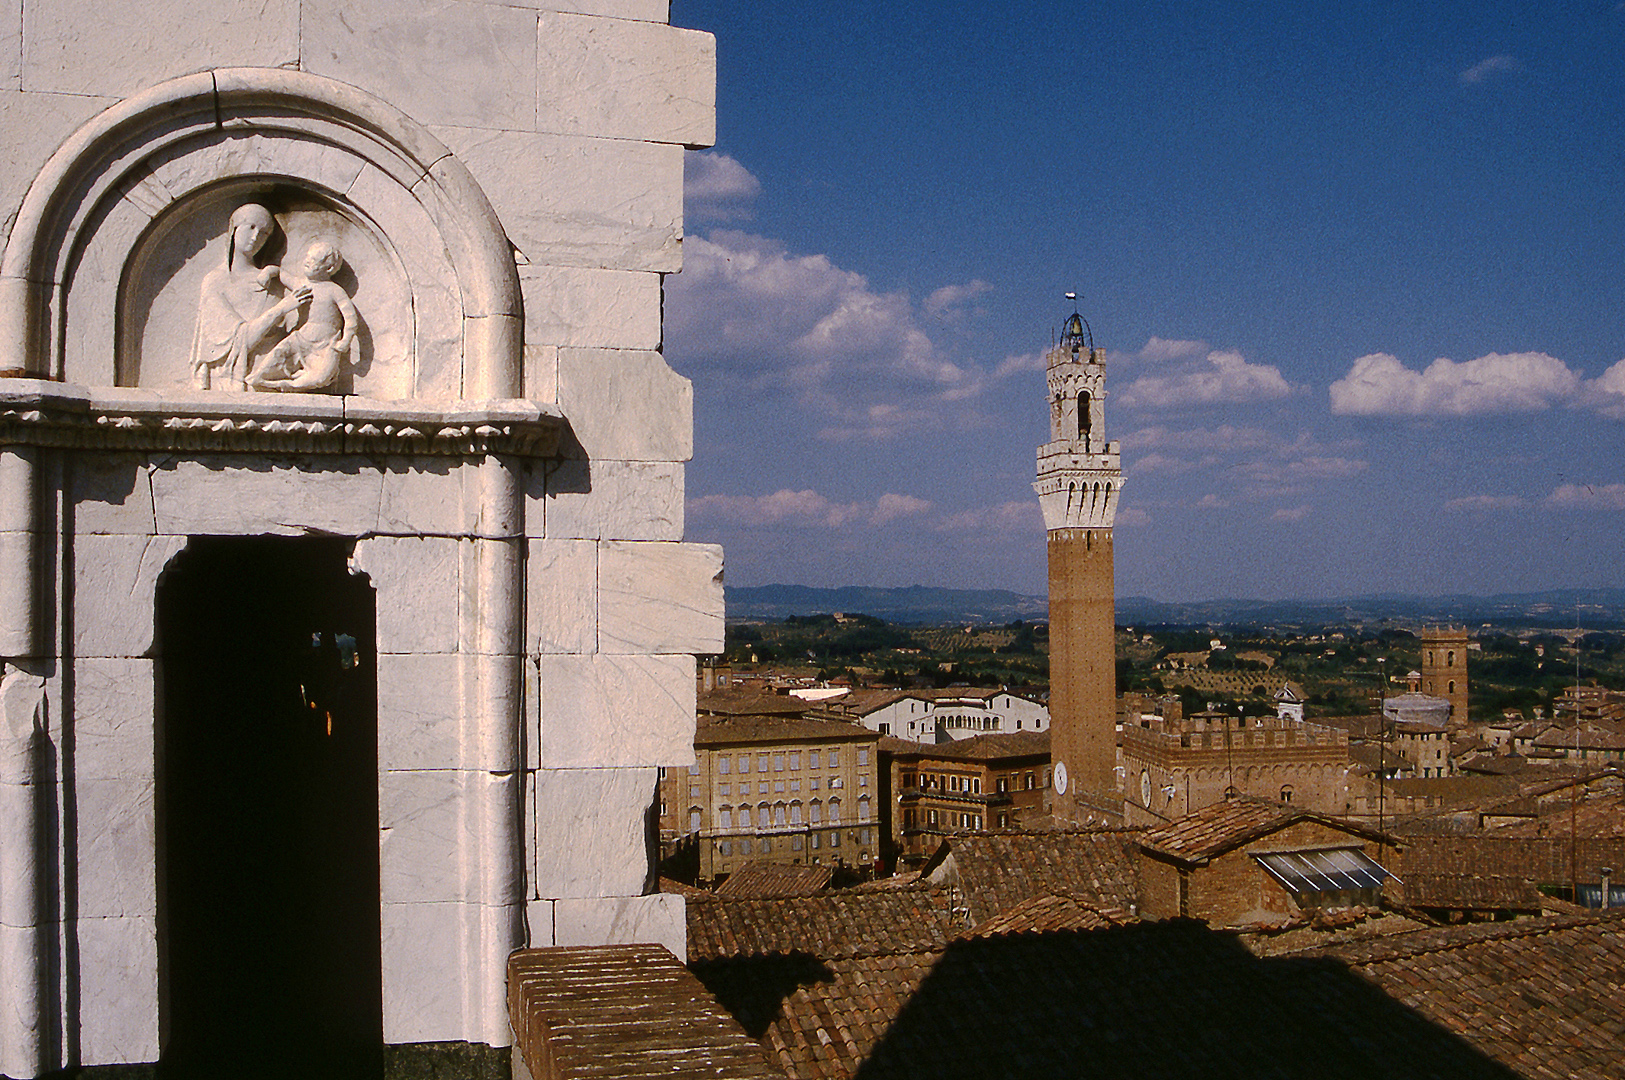 Kathedraal van Siena (Toscane, Italië); Siena Cathedral (Tuscany, Italy)